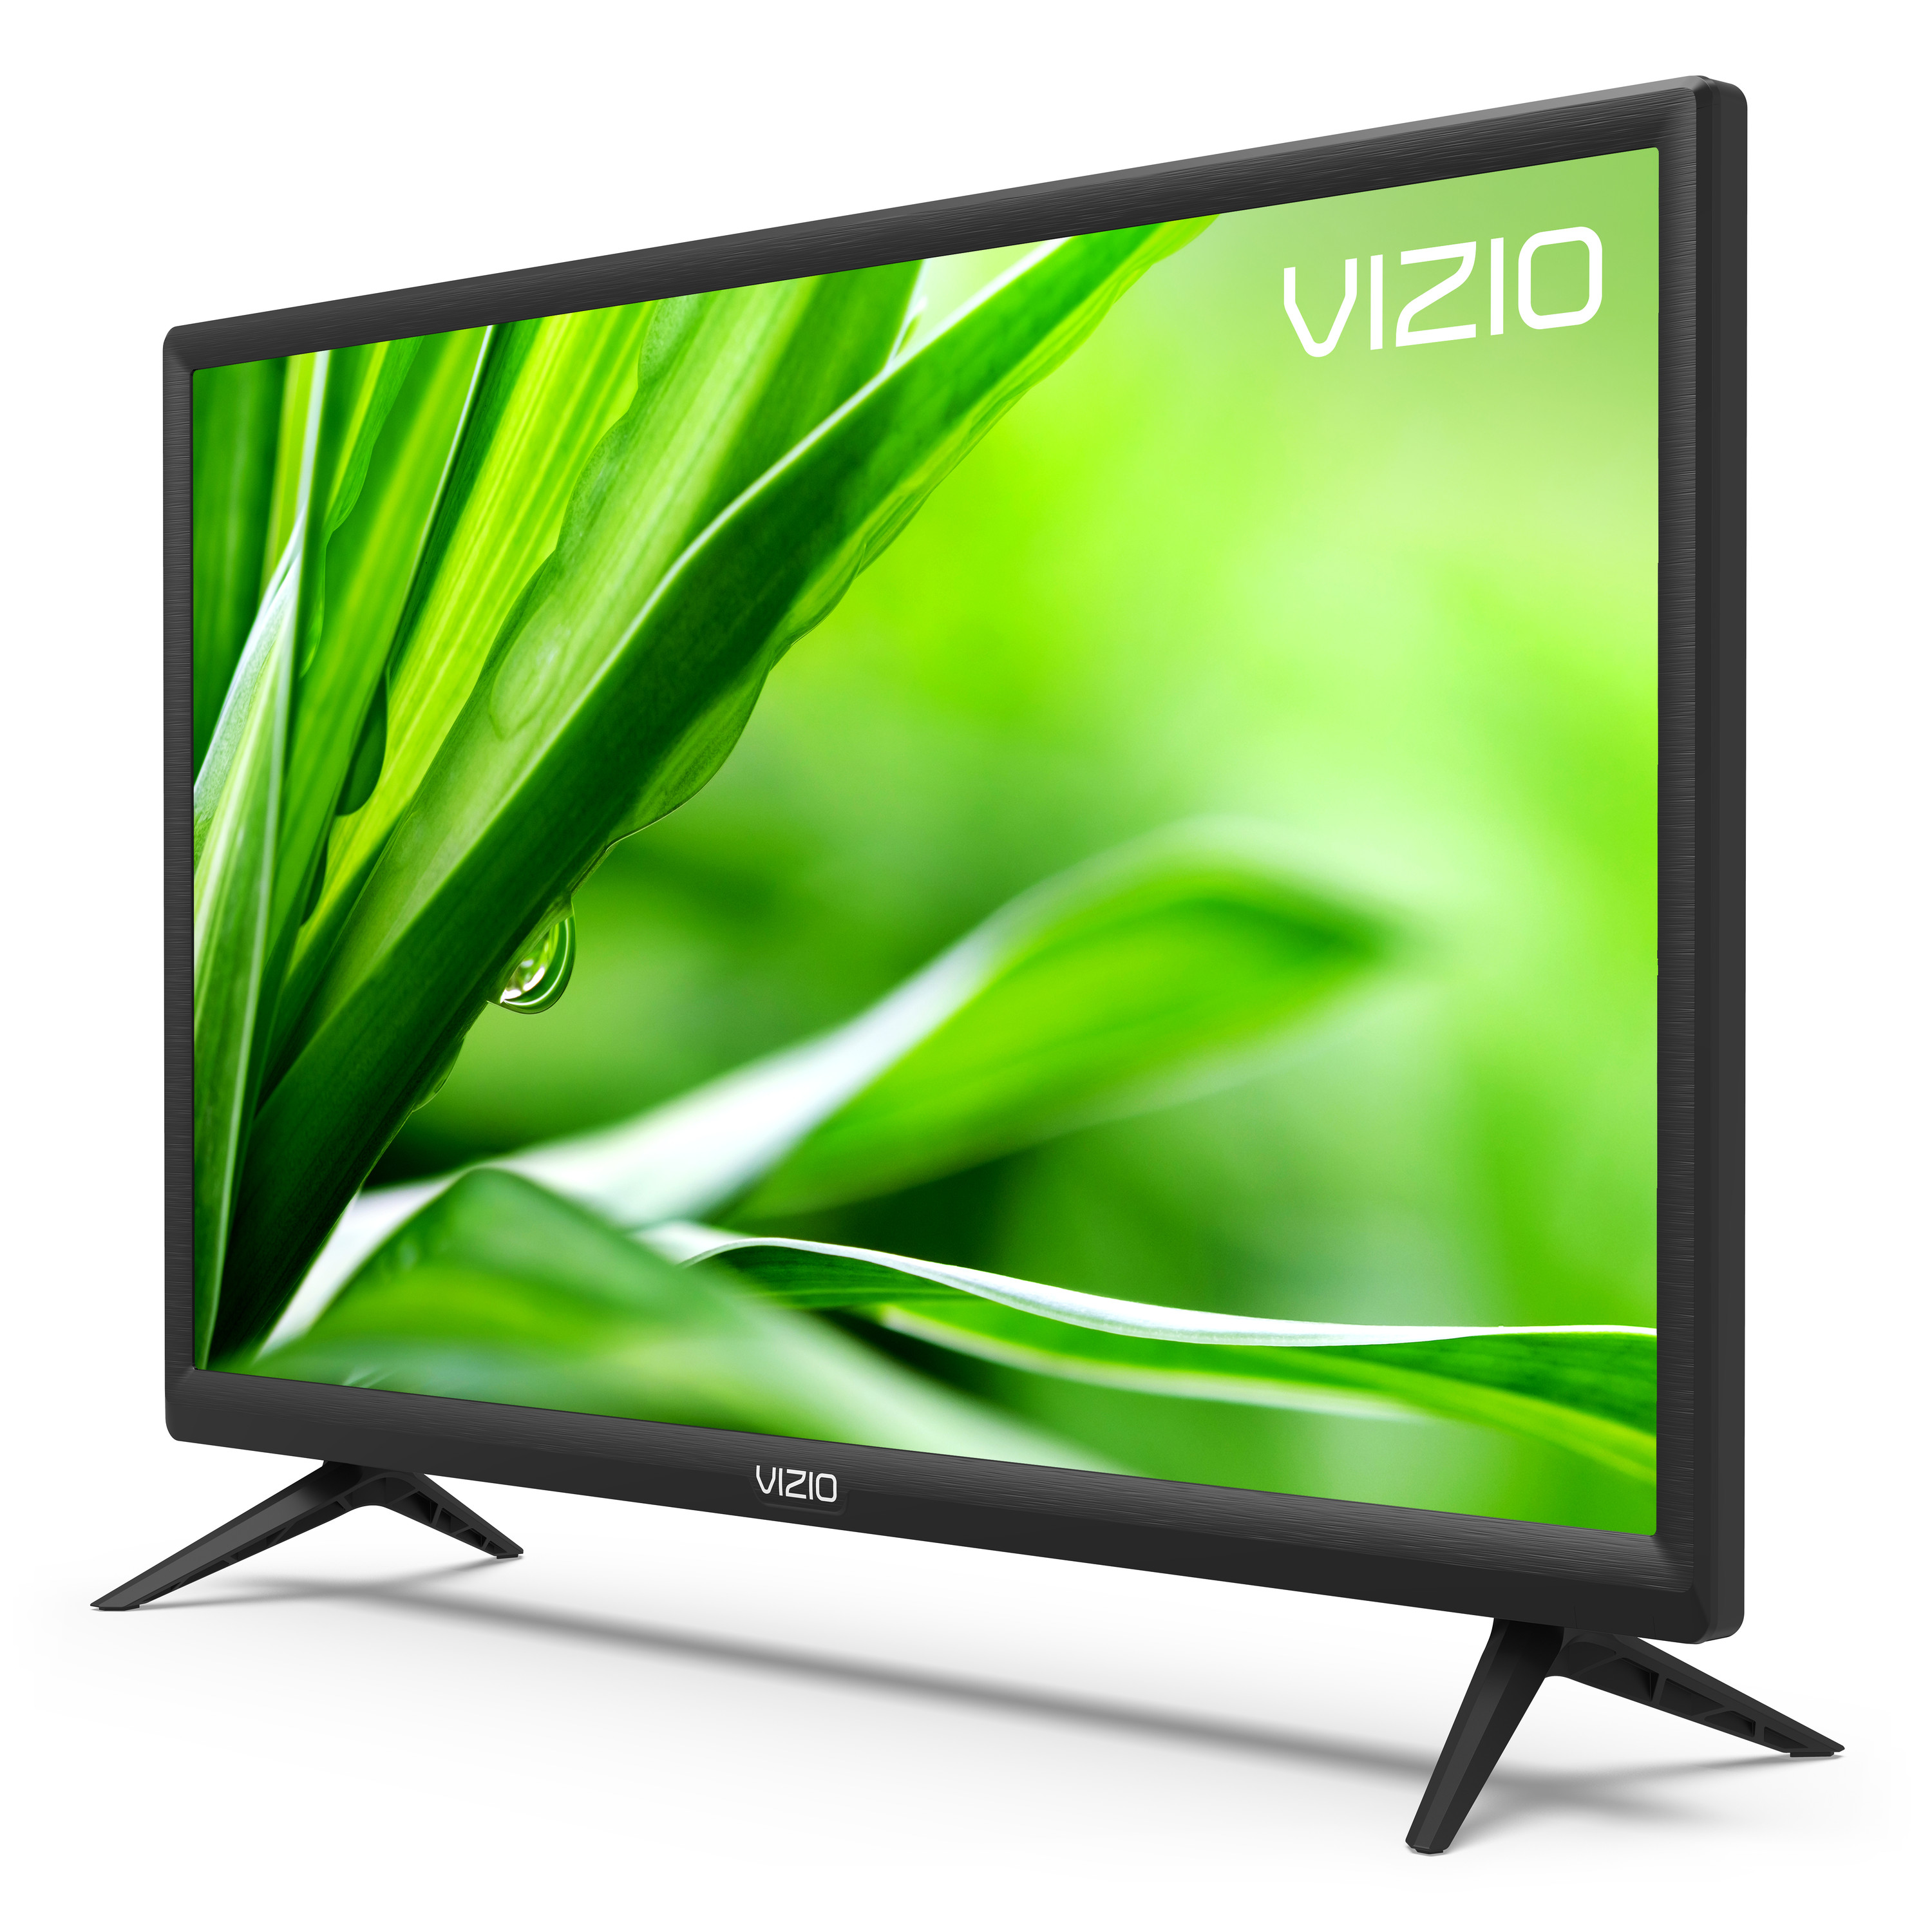 Vizio 24" Class HD LED TV D-Series D24hn-G9 - image 4 of 9